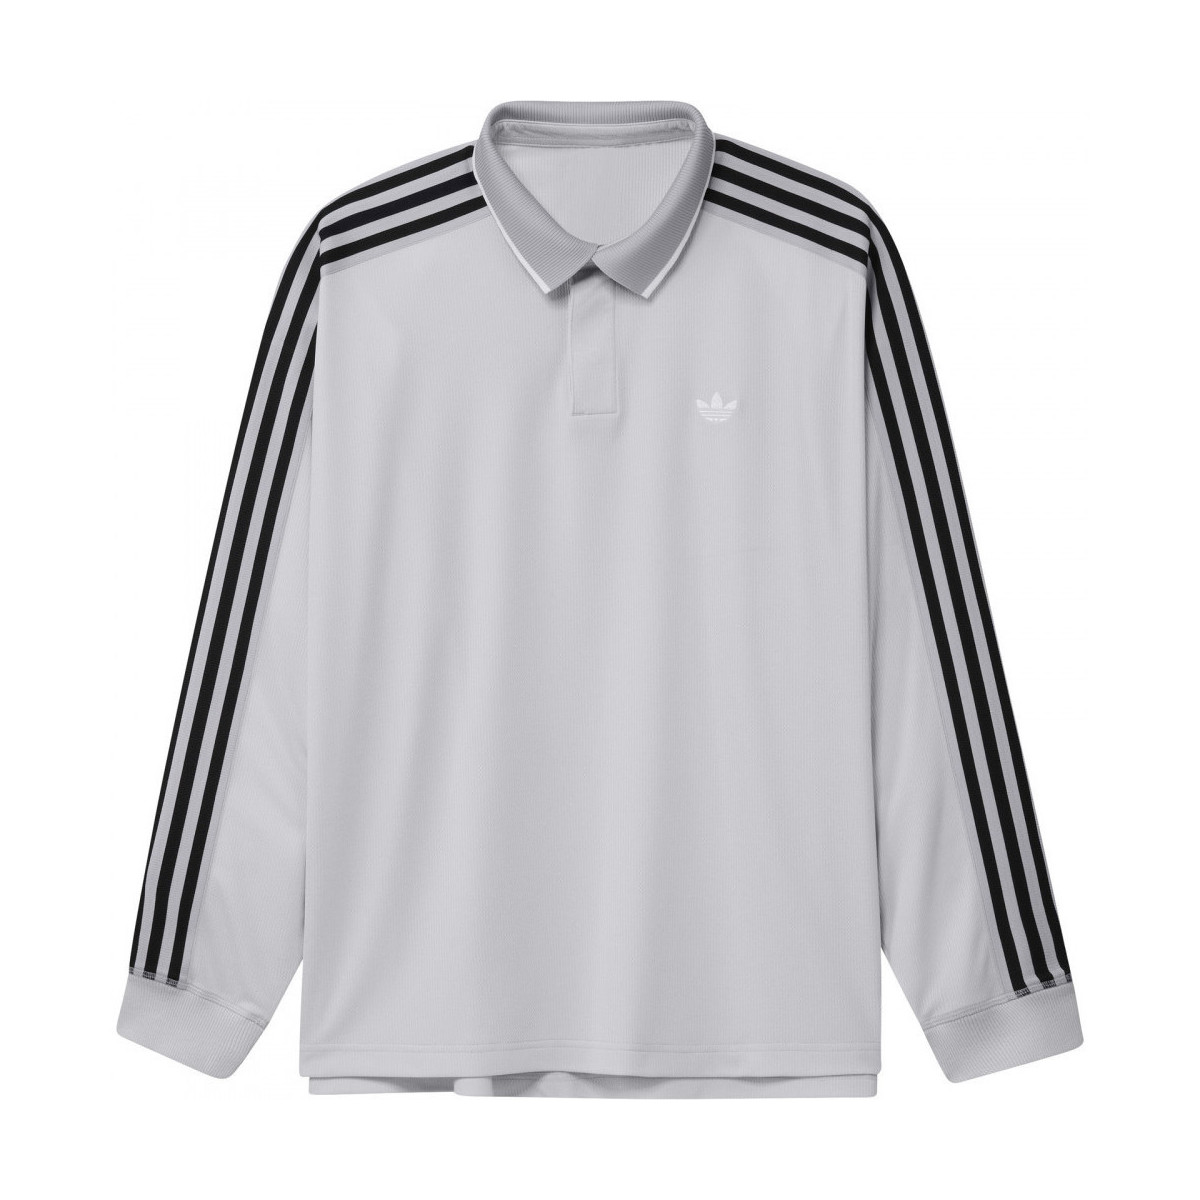 textil Herre T-shirts & poloer adidas Originals Ls football jsy Grå